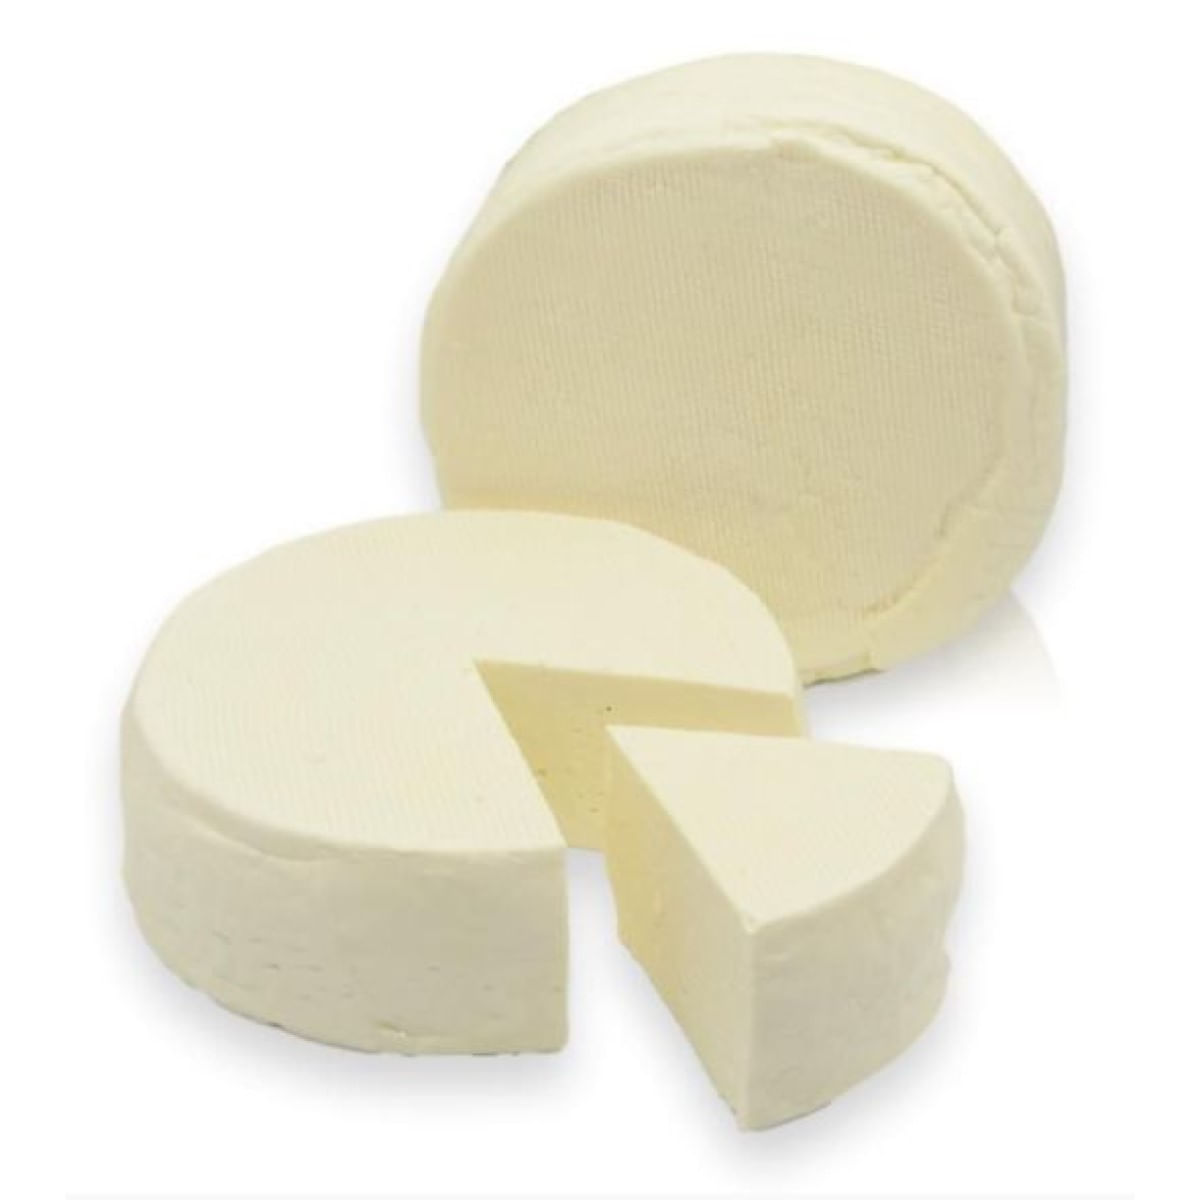 queijo-minas-zero-lactose-vale-milk-kg-1.jpg